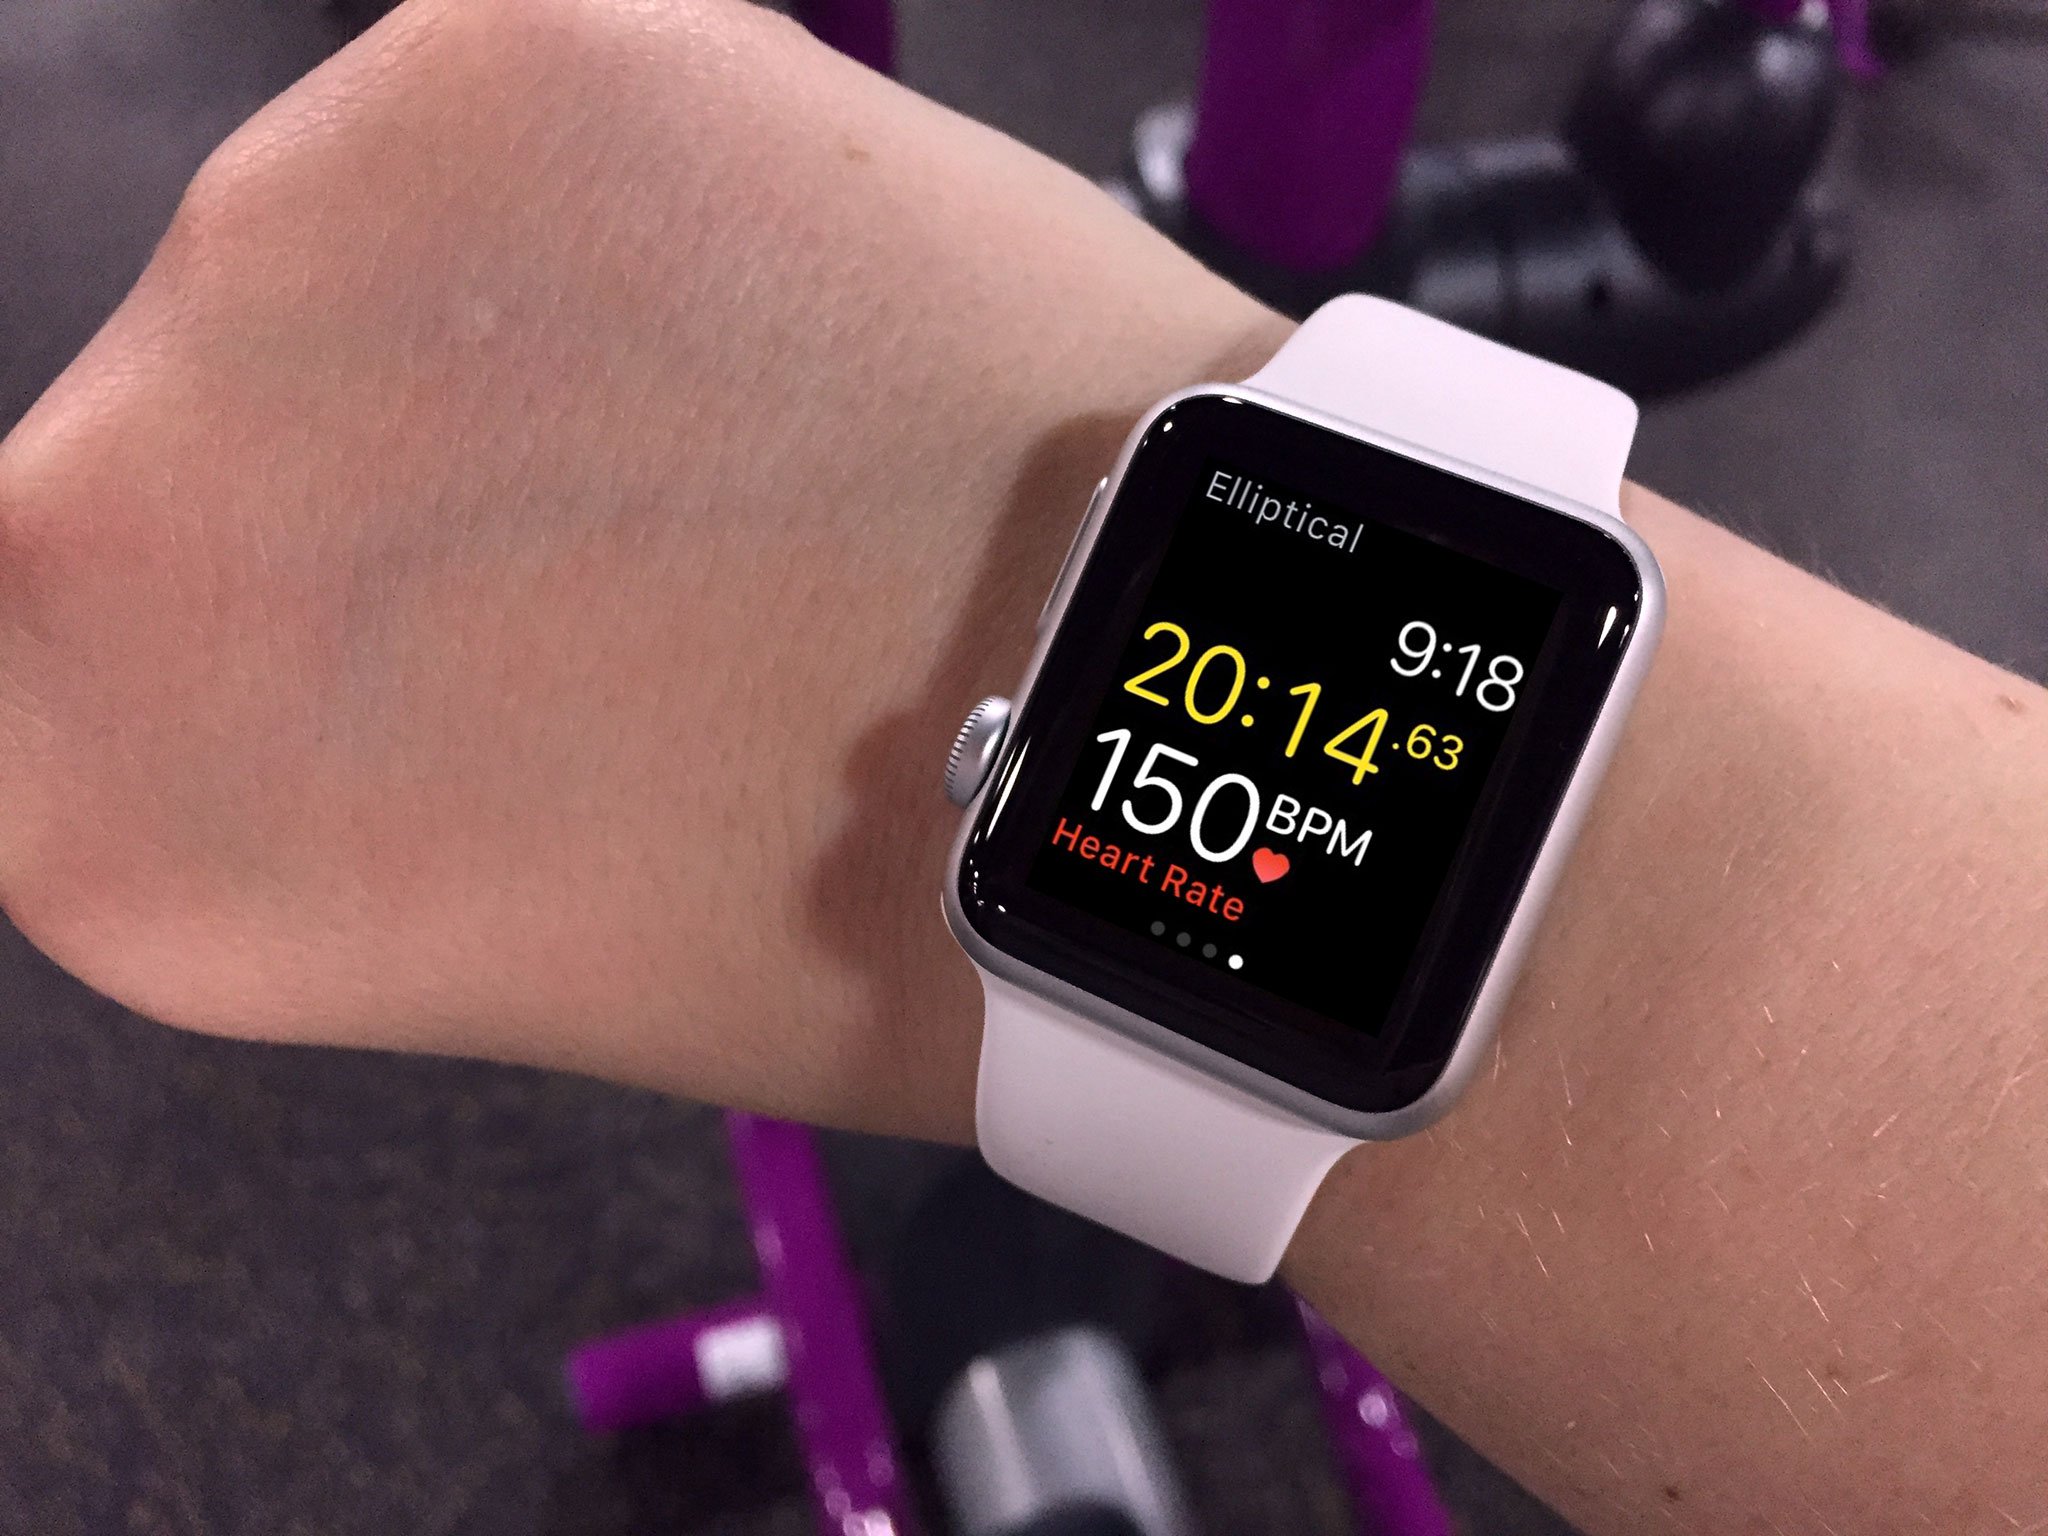 apple watch gym workout tracker